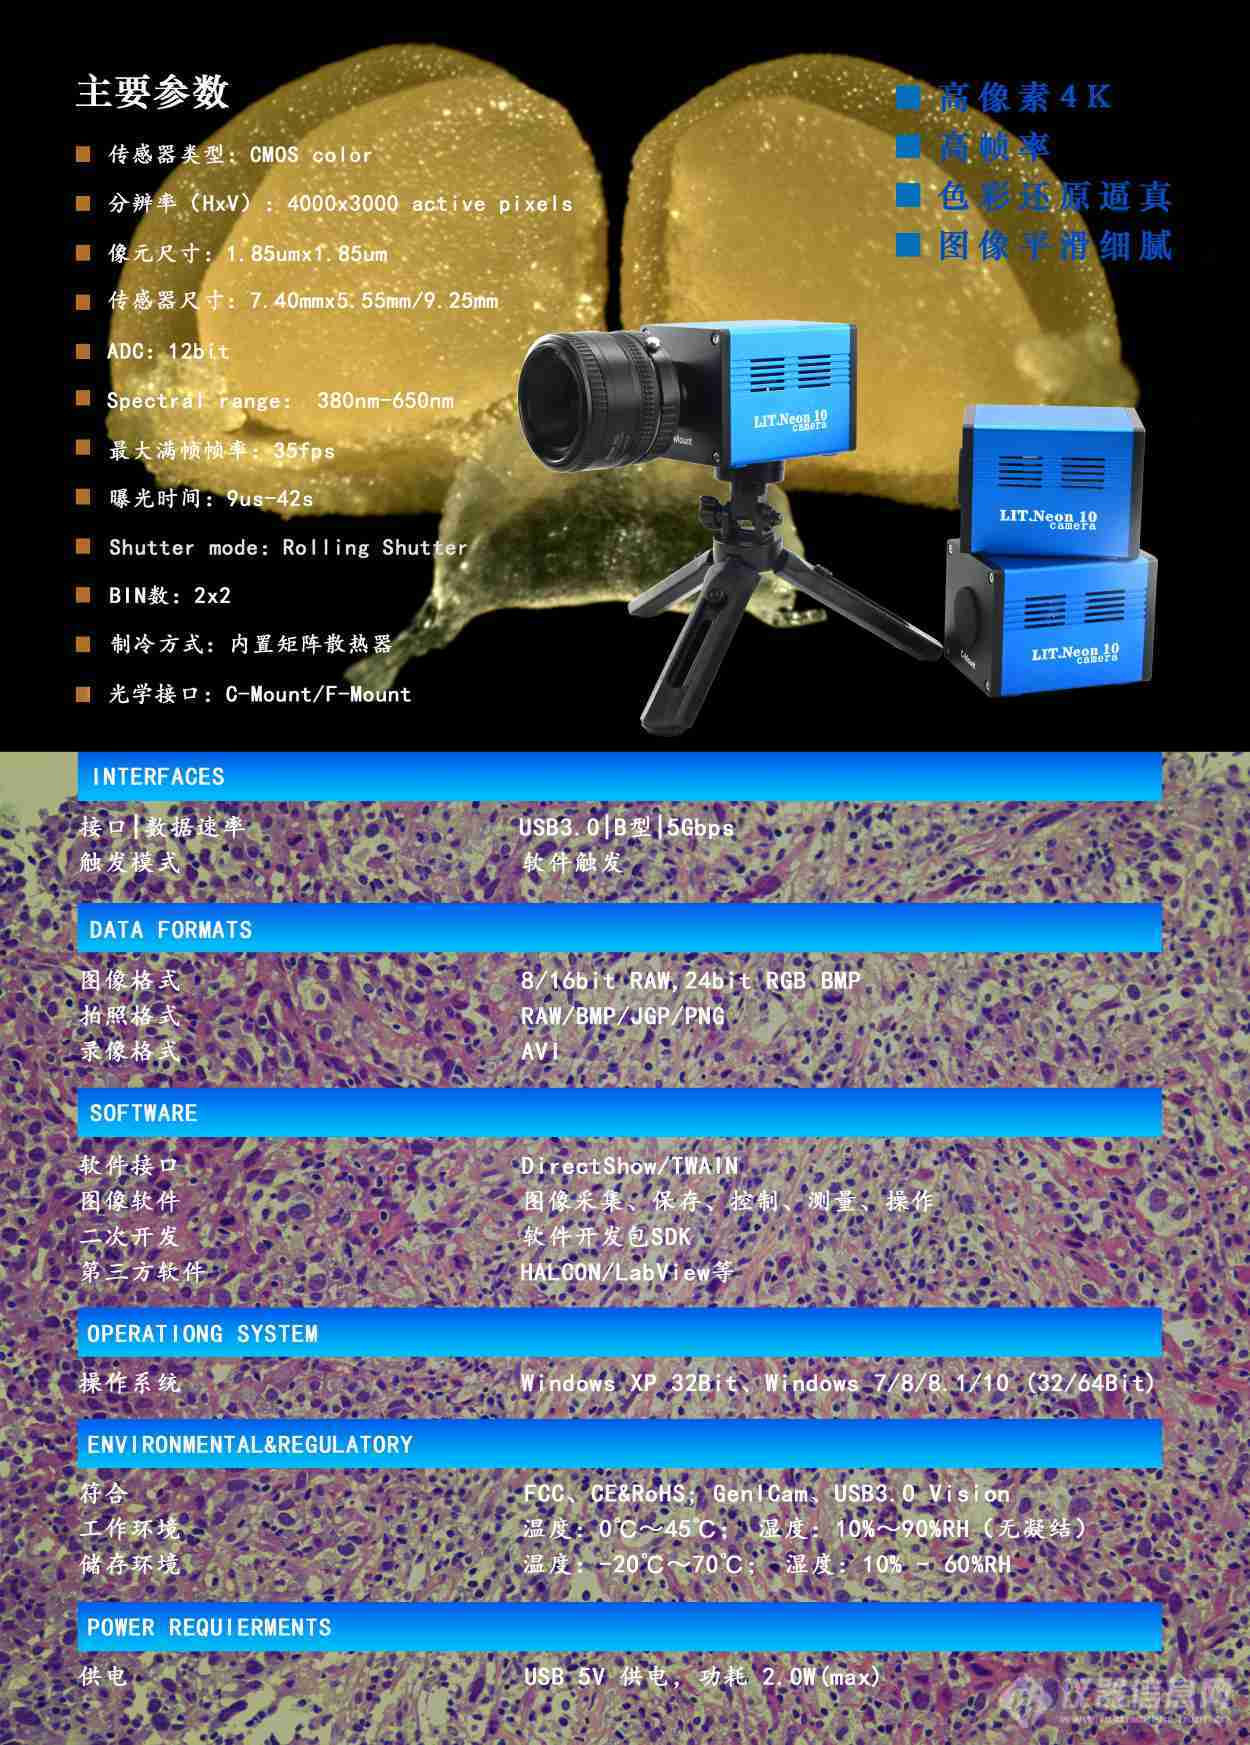 Laite莱特 显微镜相机LIT.Neon 10 Flyer_V21.04_页面_2 A.jpg